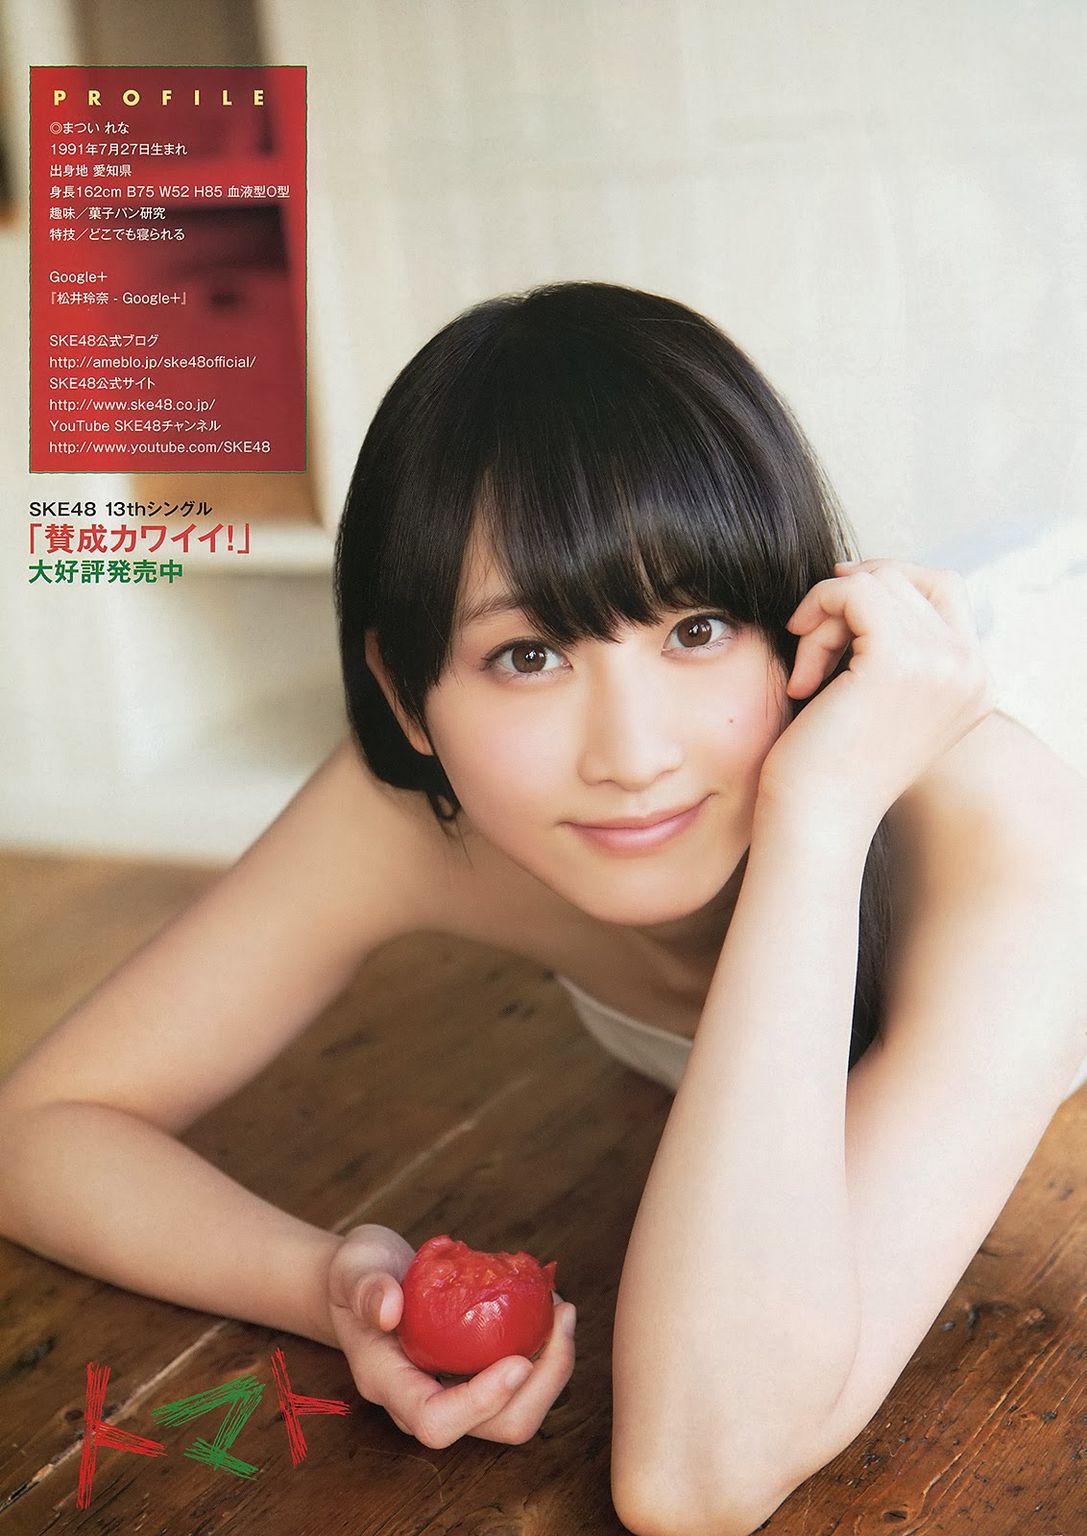 SKE48 Rena Matsui Tomato on Young Animal Magazine 008.jpg